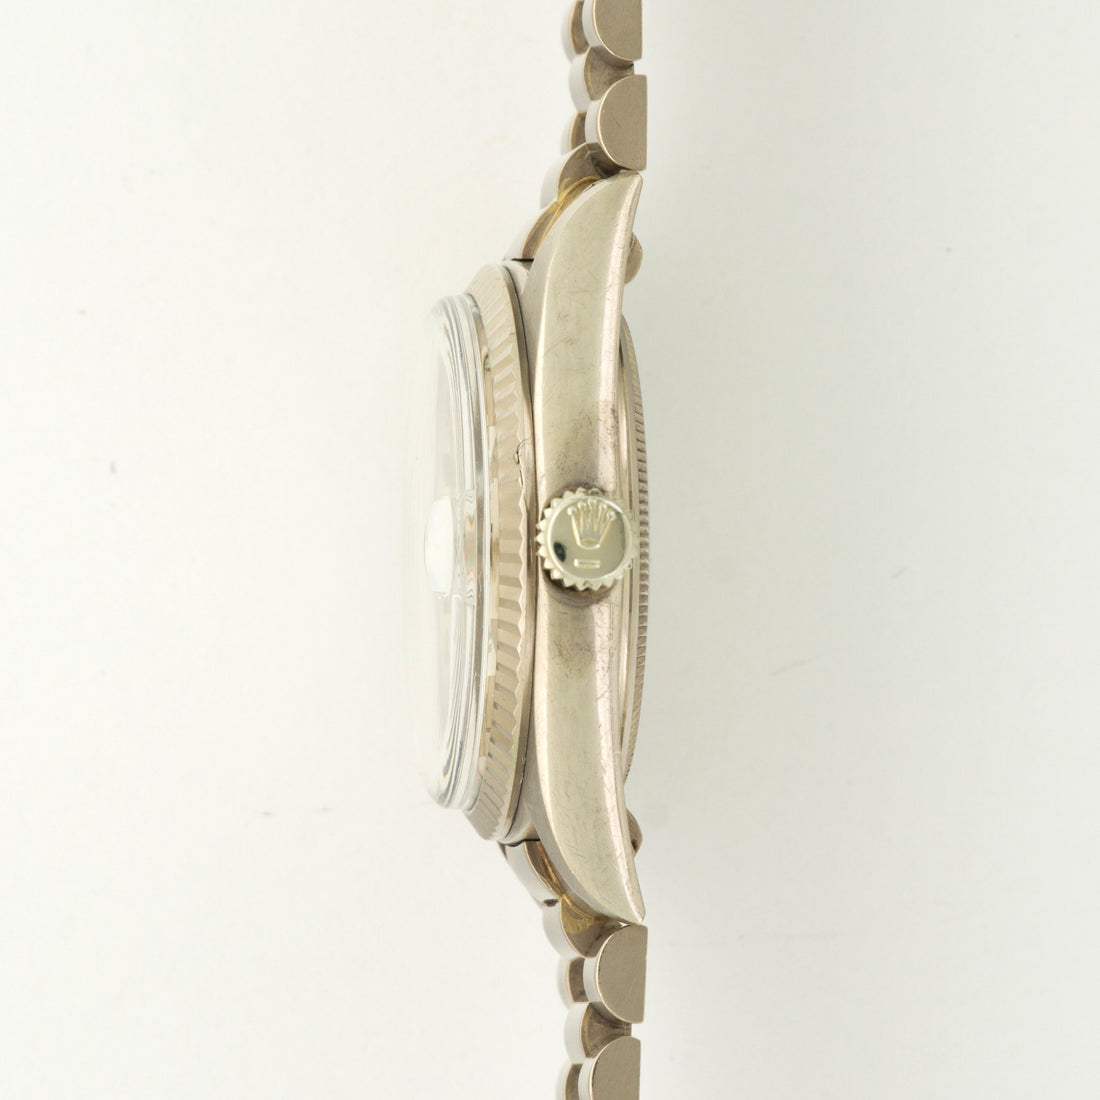 Rolex White Gold Day-Date Watch Ref. 1803 with Original Paper